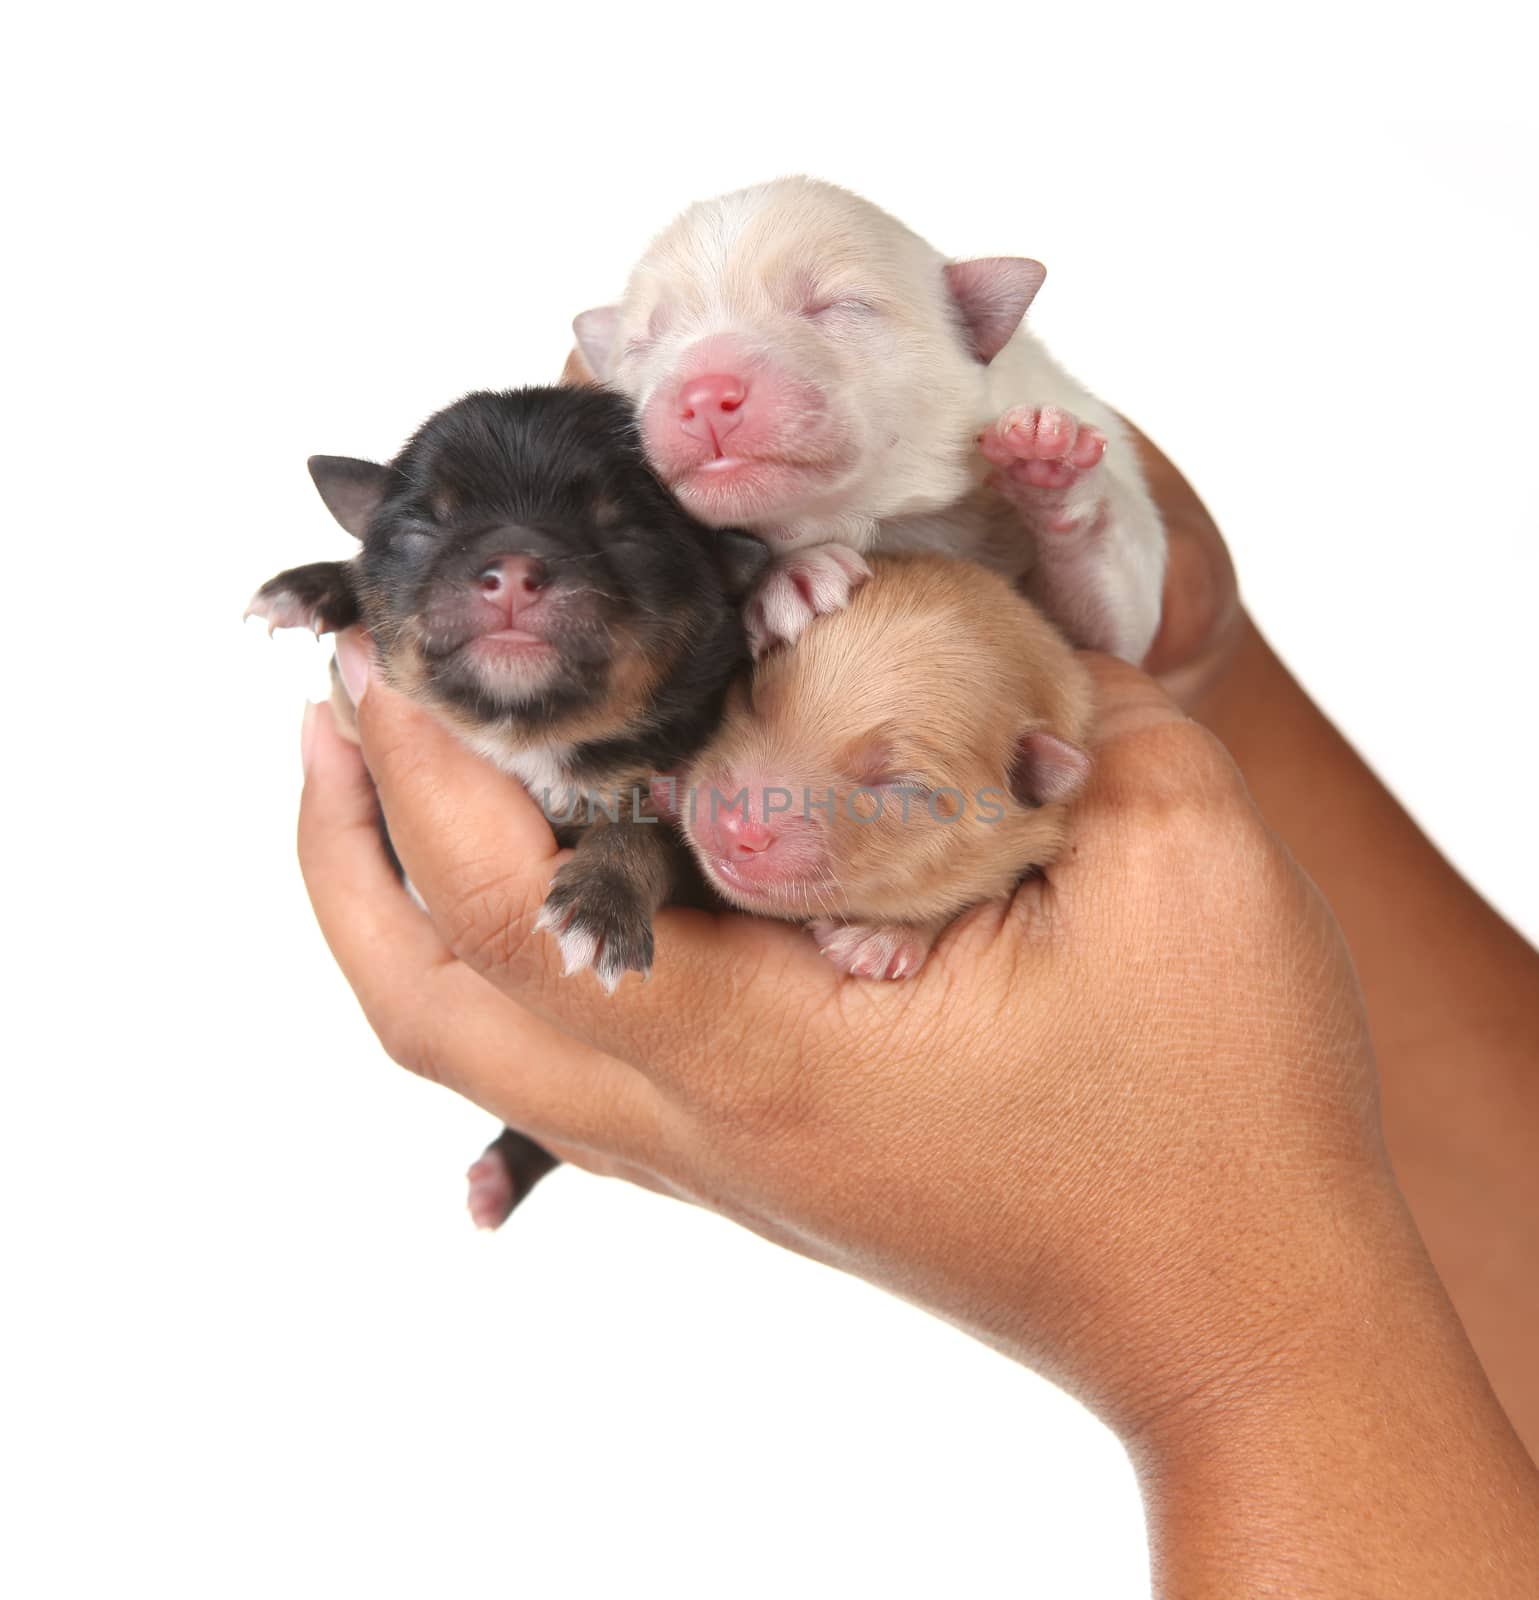 Cute Baby Puppies Being Held in Human Hands